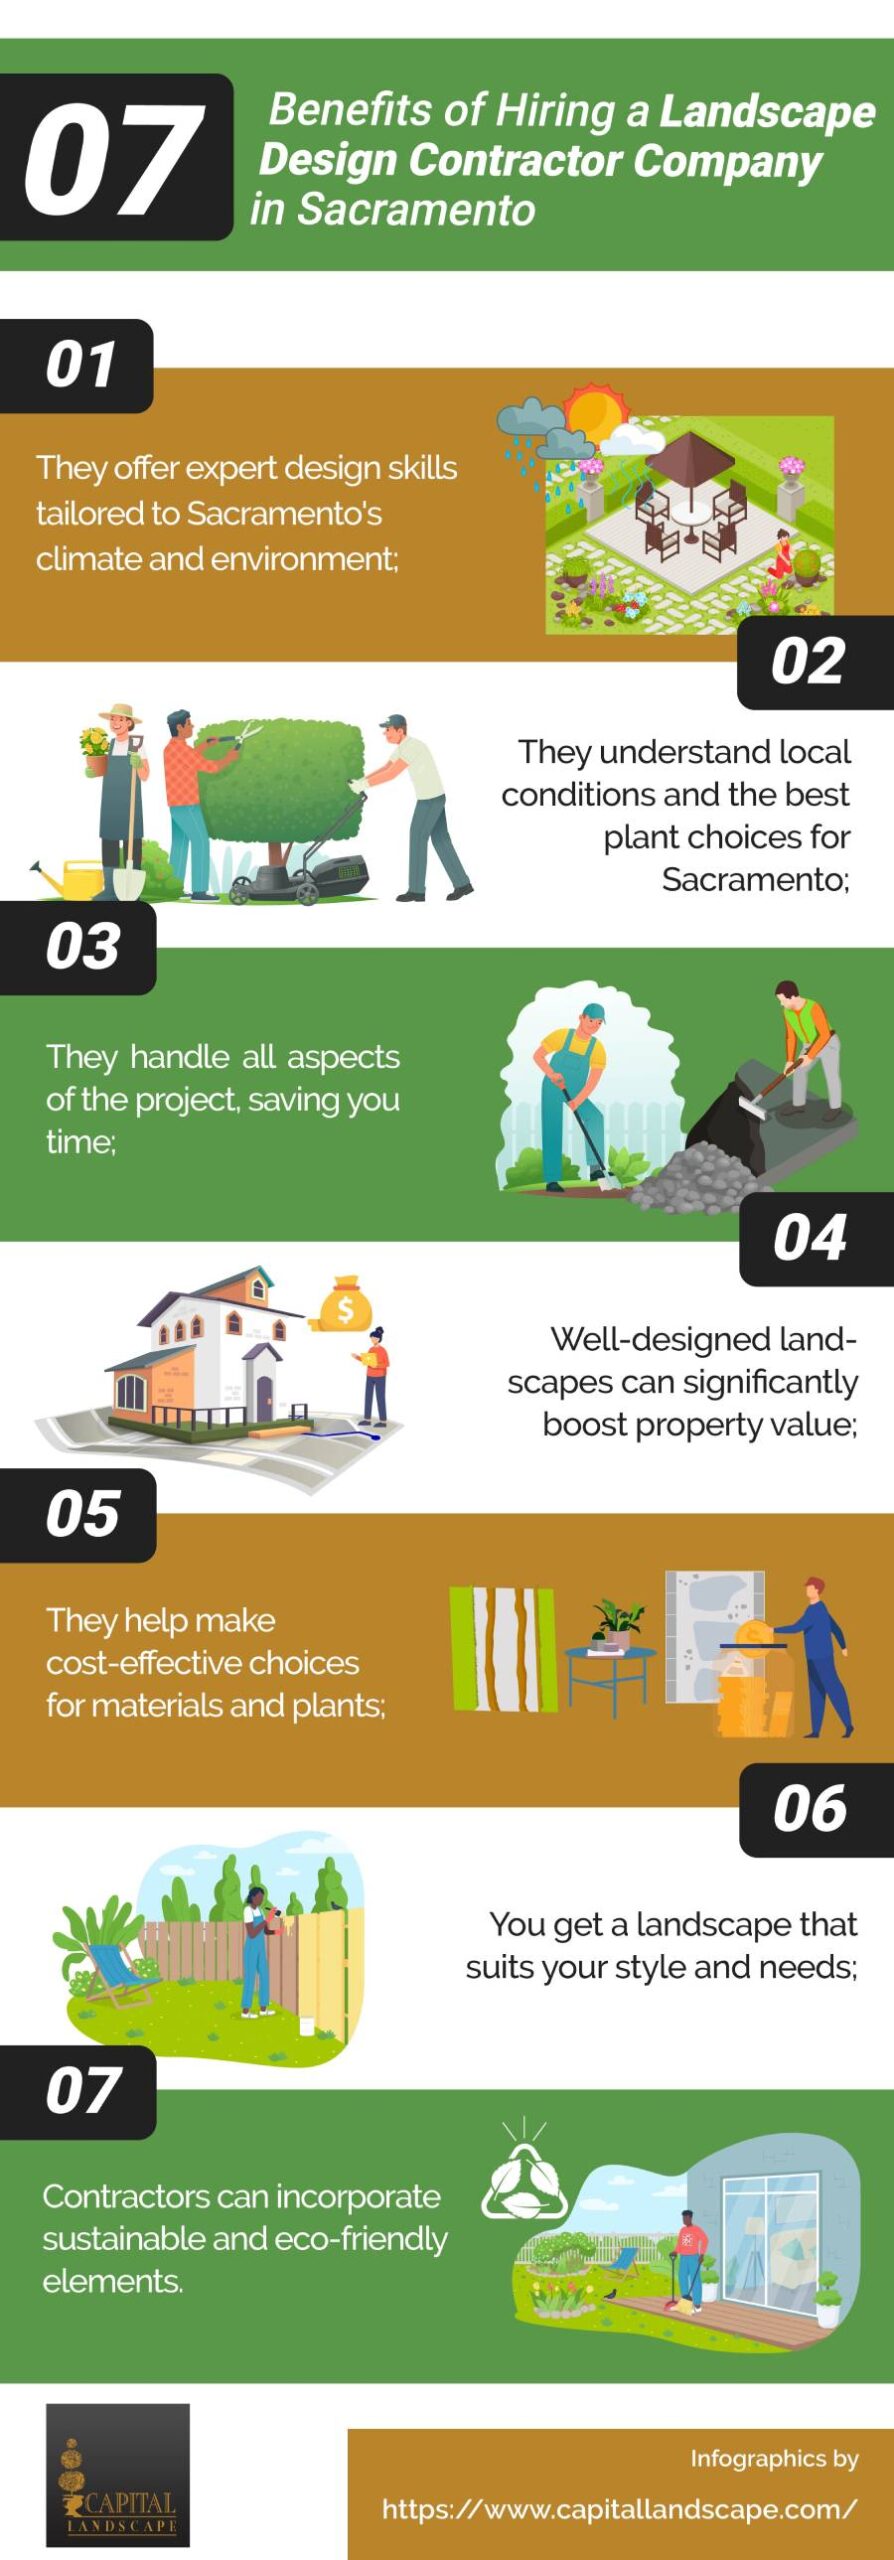 Benefits of Hiring a Landscape Design Contractor Company in Sacramento